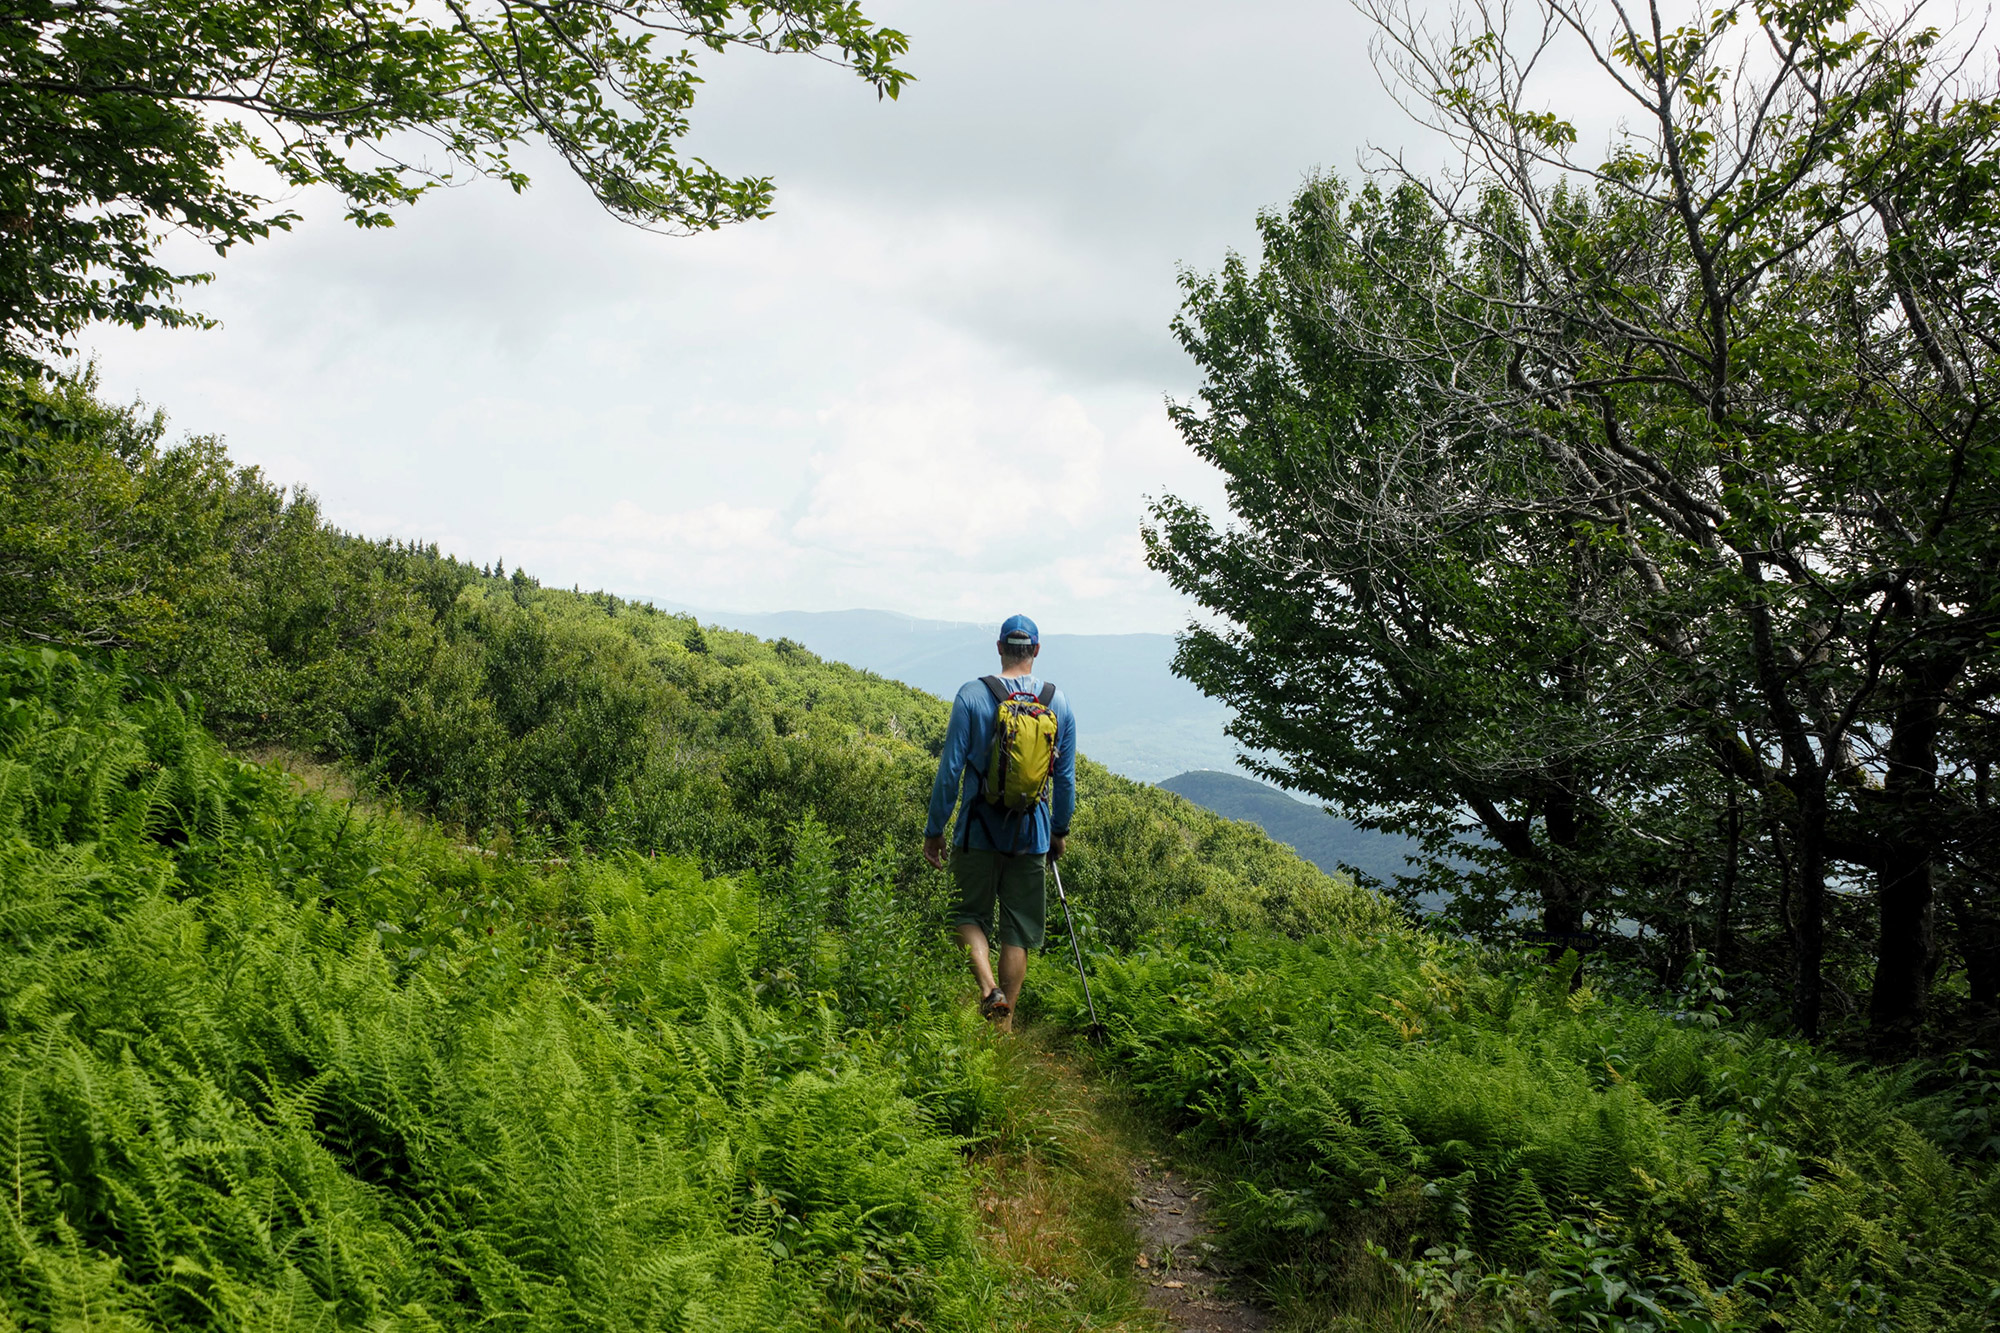 Alpha Guide: Hiking Mount Greylock's Thunderbolt Trail - goEast